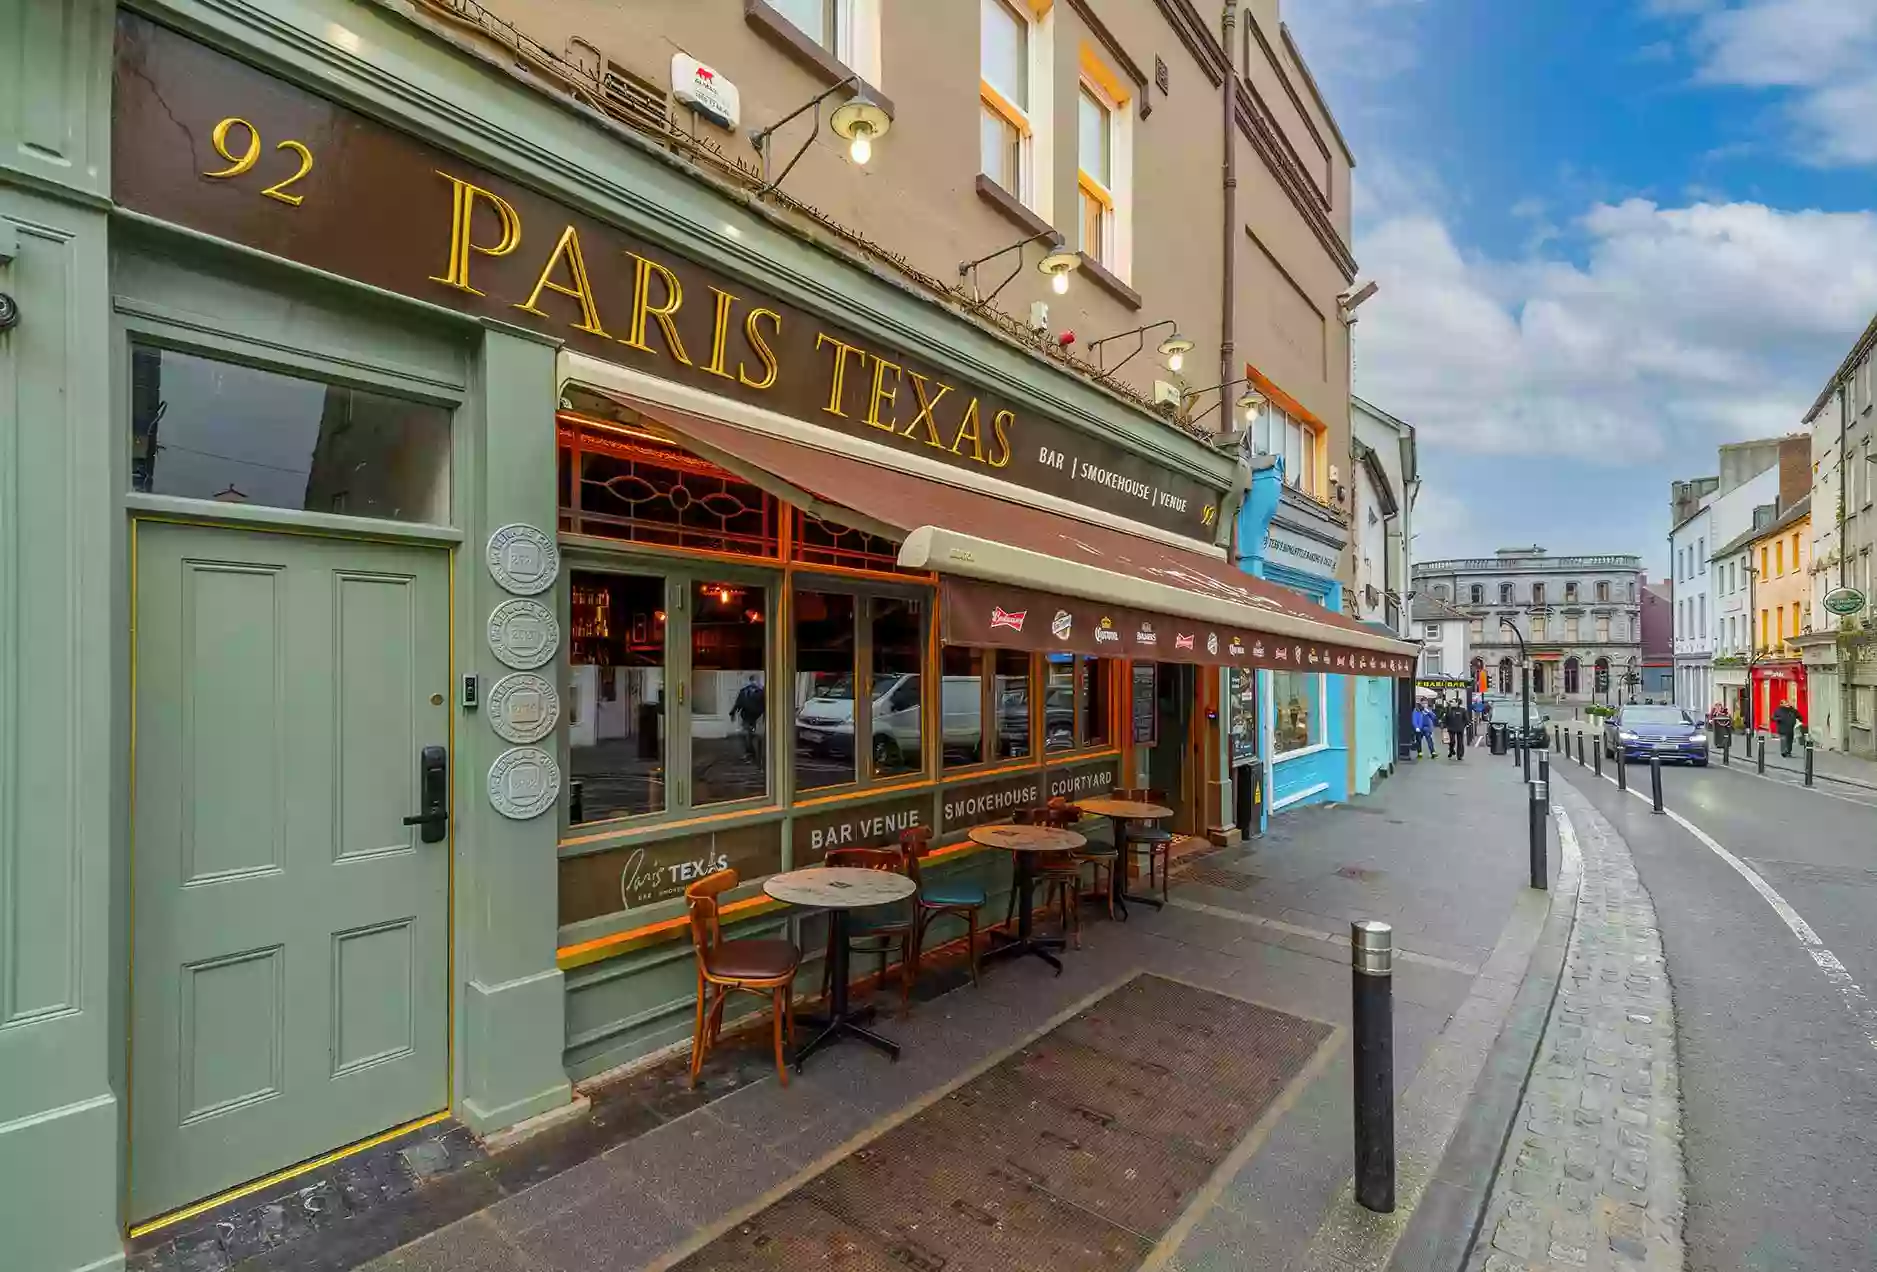 Paris Texas Bar and Restaurant